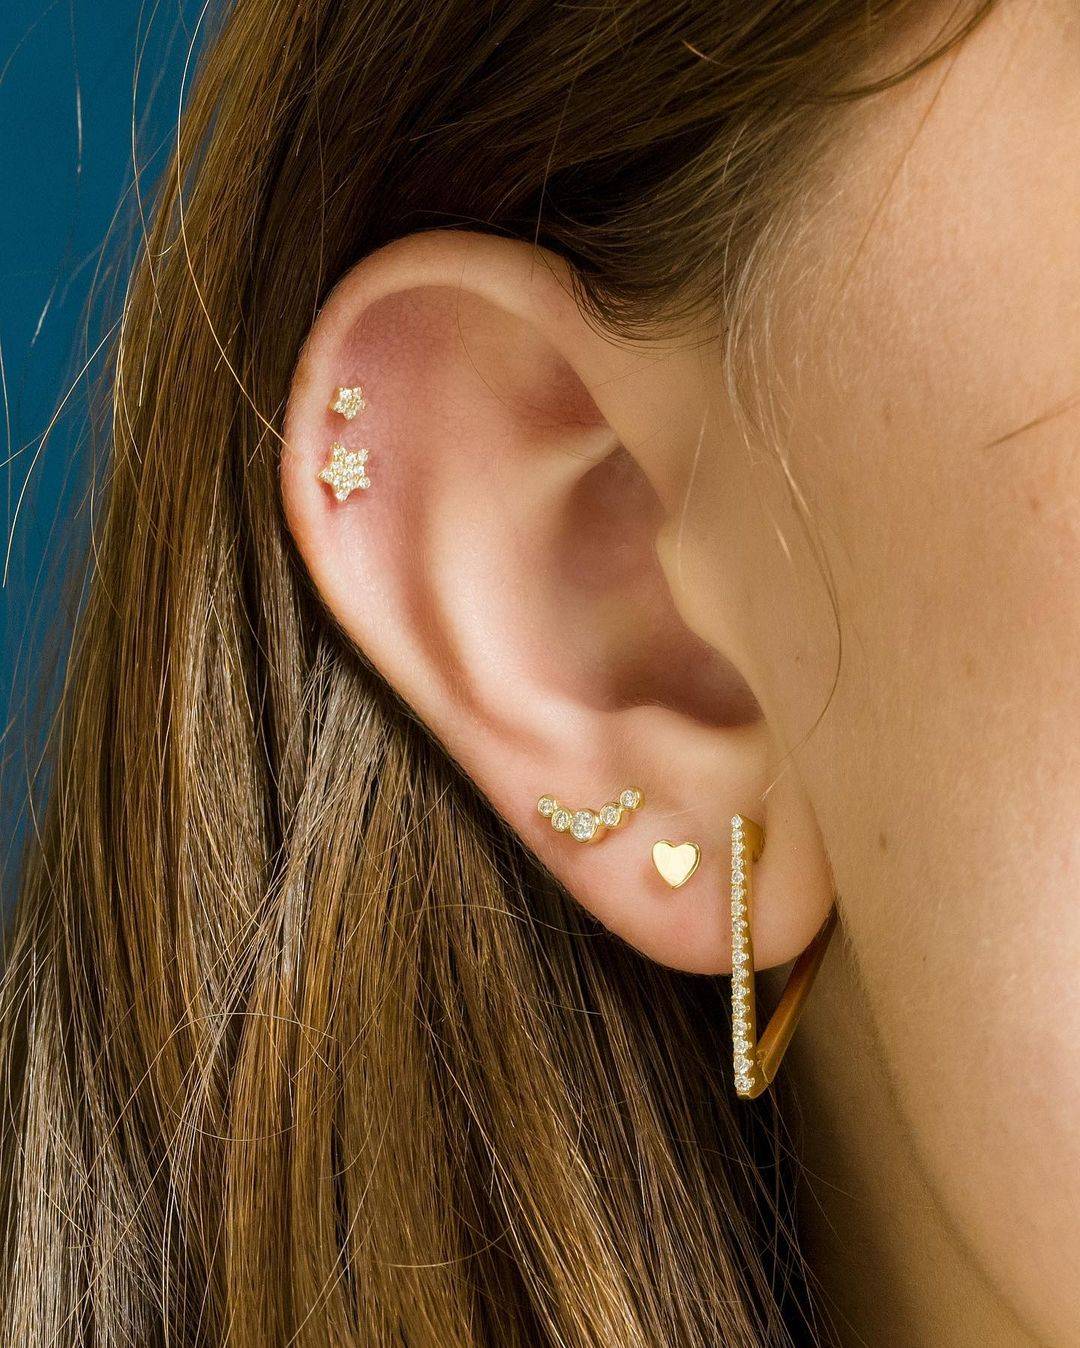 Example of Double Helix Piercing Earrings